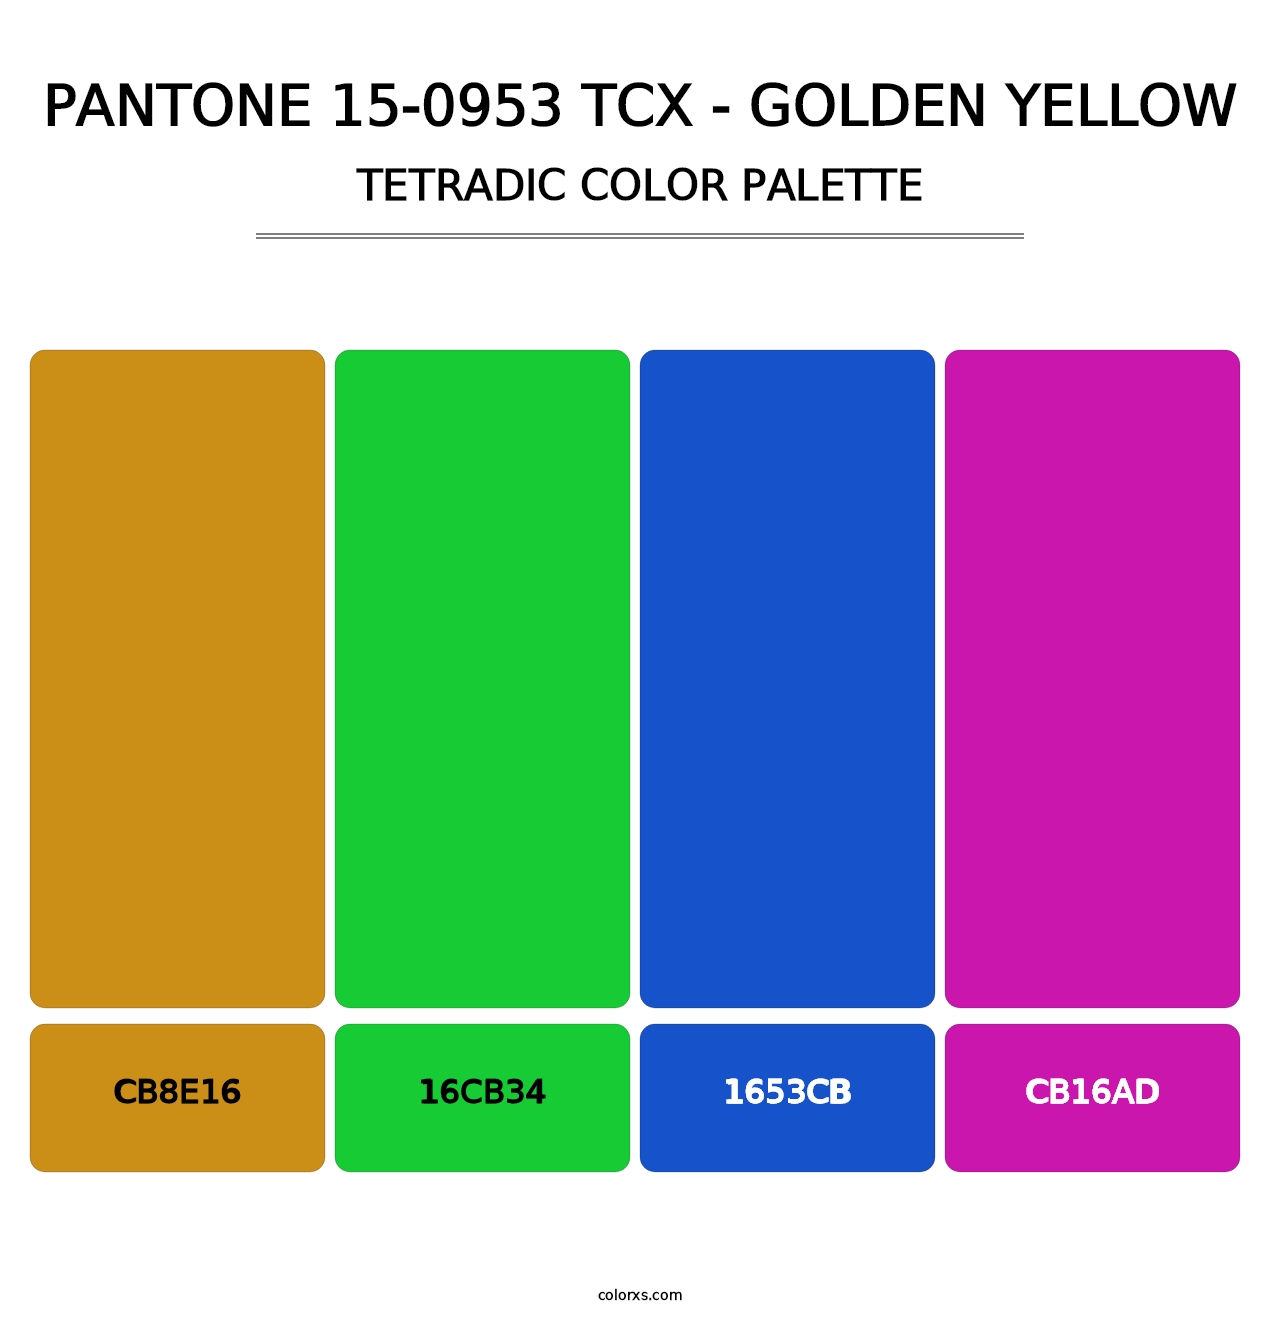 PANTONE 15-0953 TCX - Golden Yellow - Tetradic Color Palette